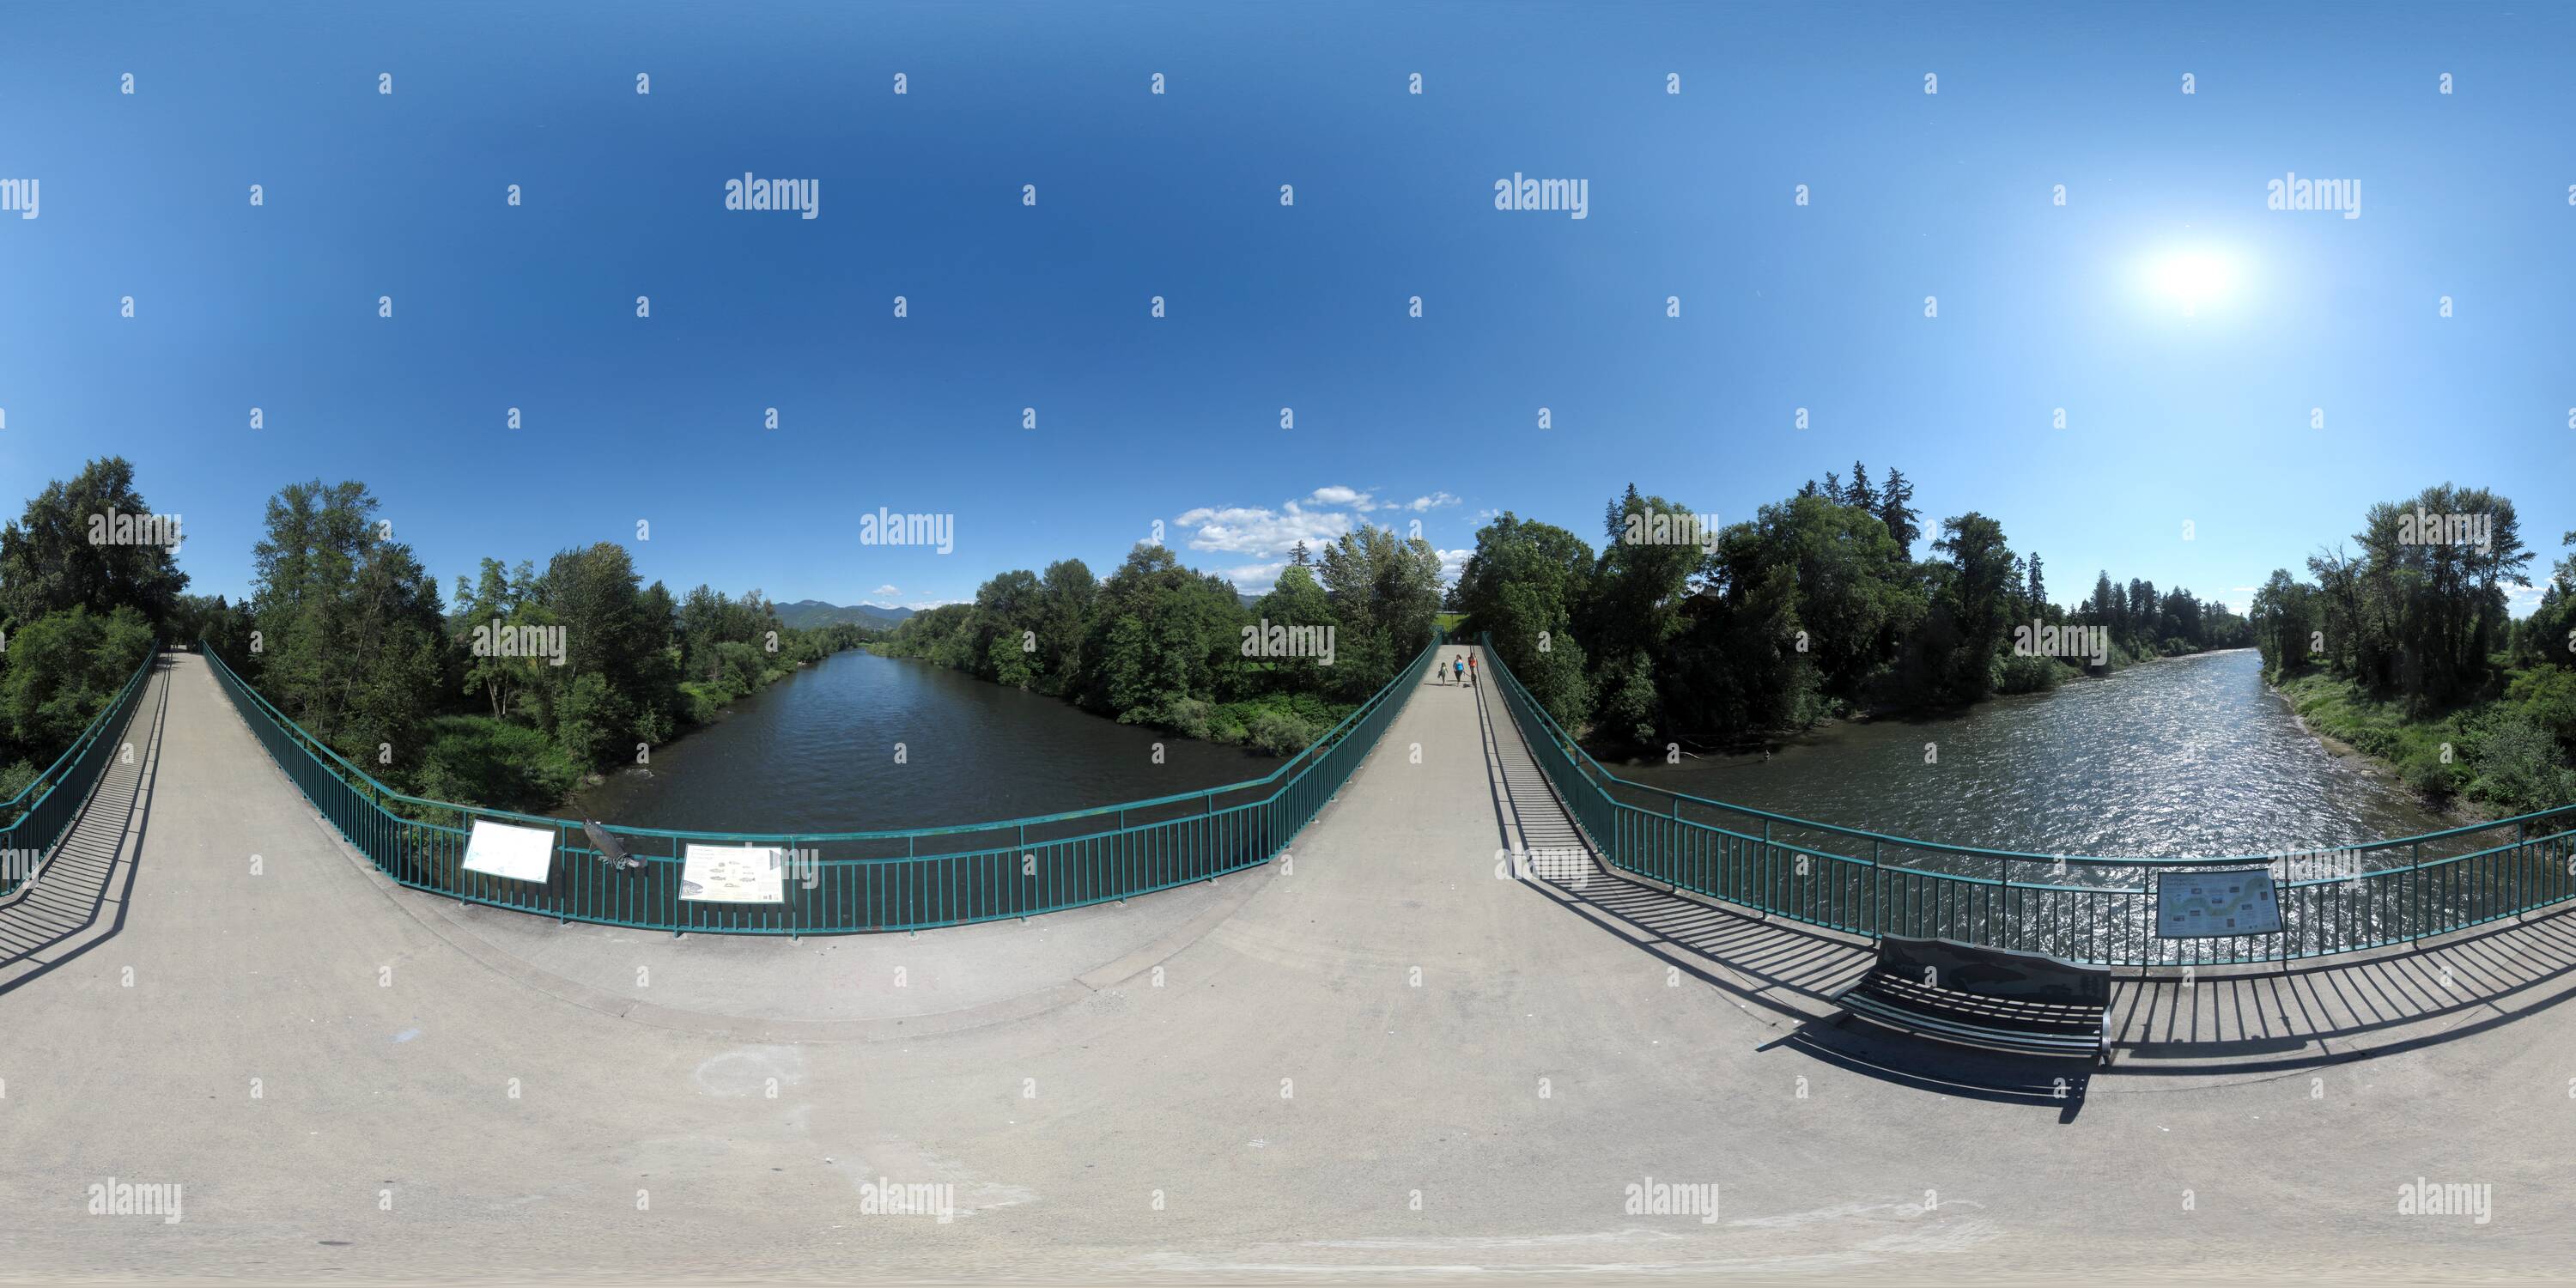 Visualizzazione panoramica a 360 gradi di Rogue River - Reinhart parco dei volontari